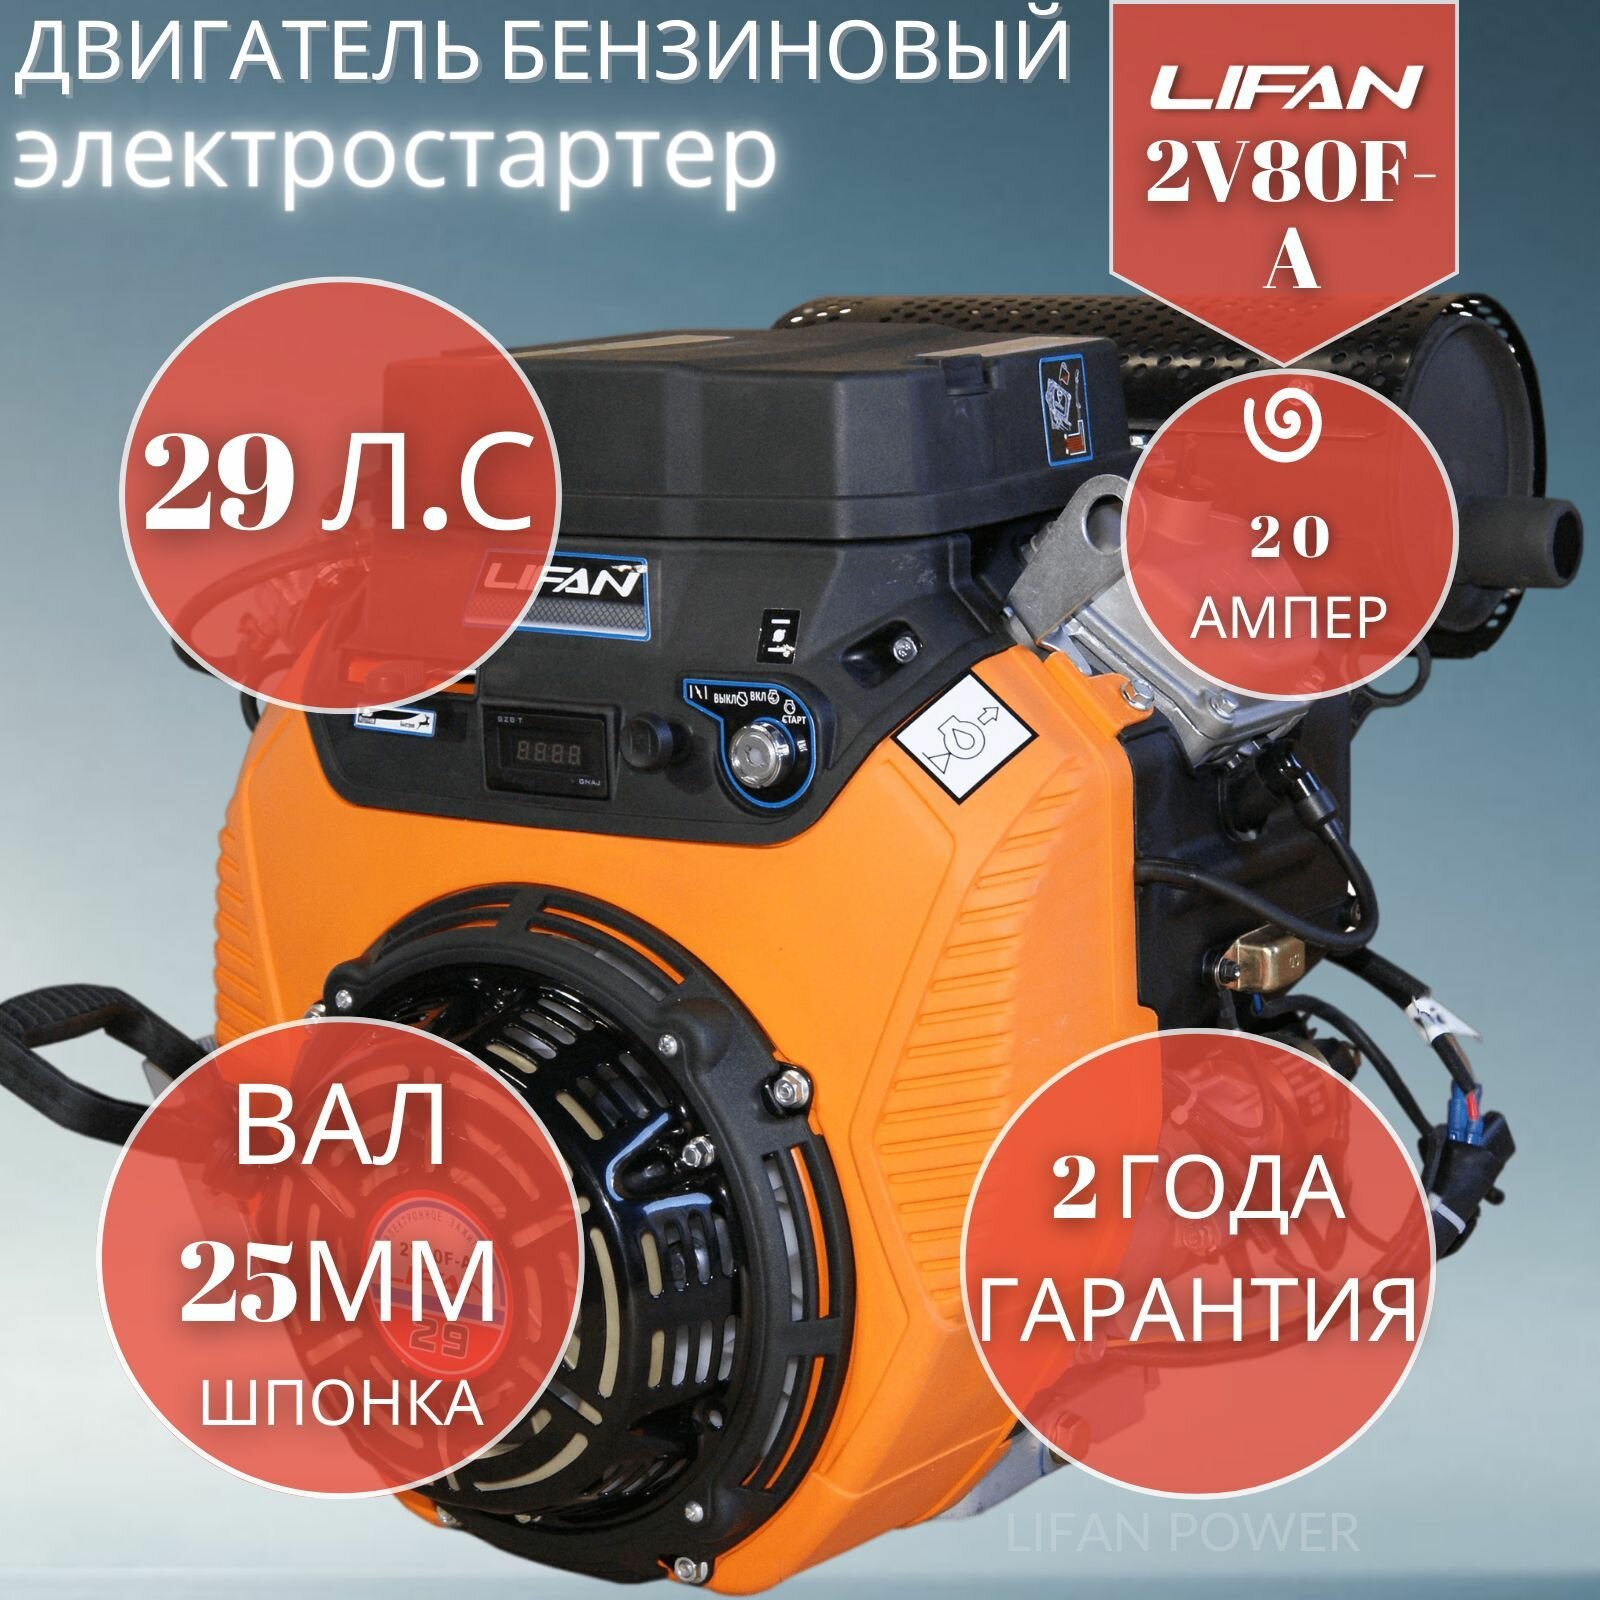 Бензиновый двигатель LIFAN 2V80F-A 29 л.с.